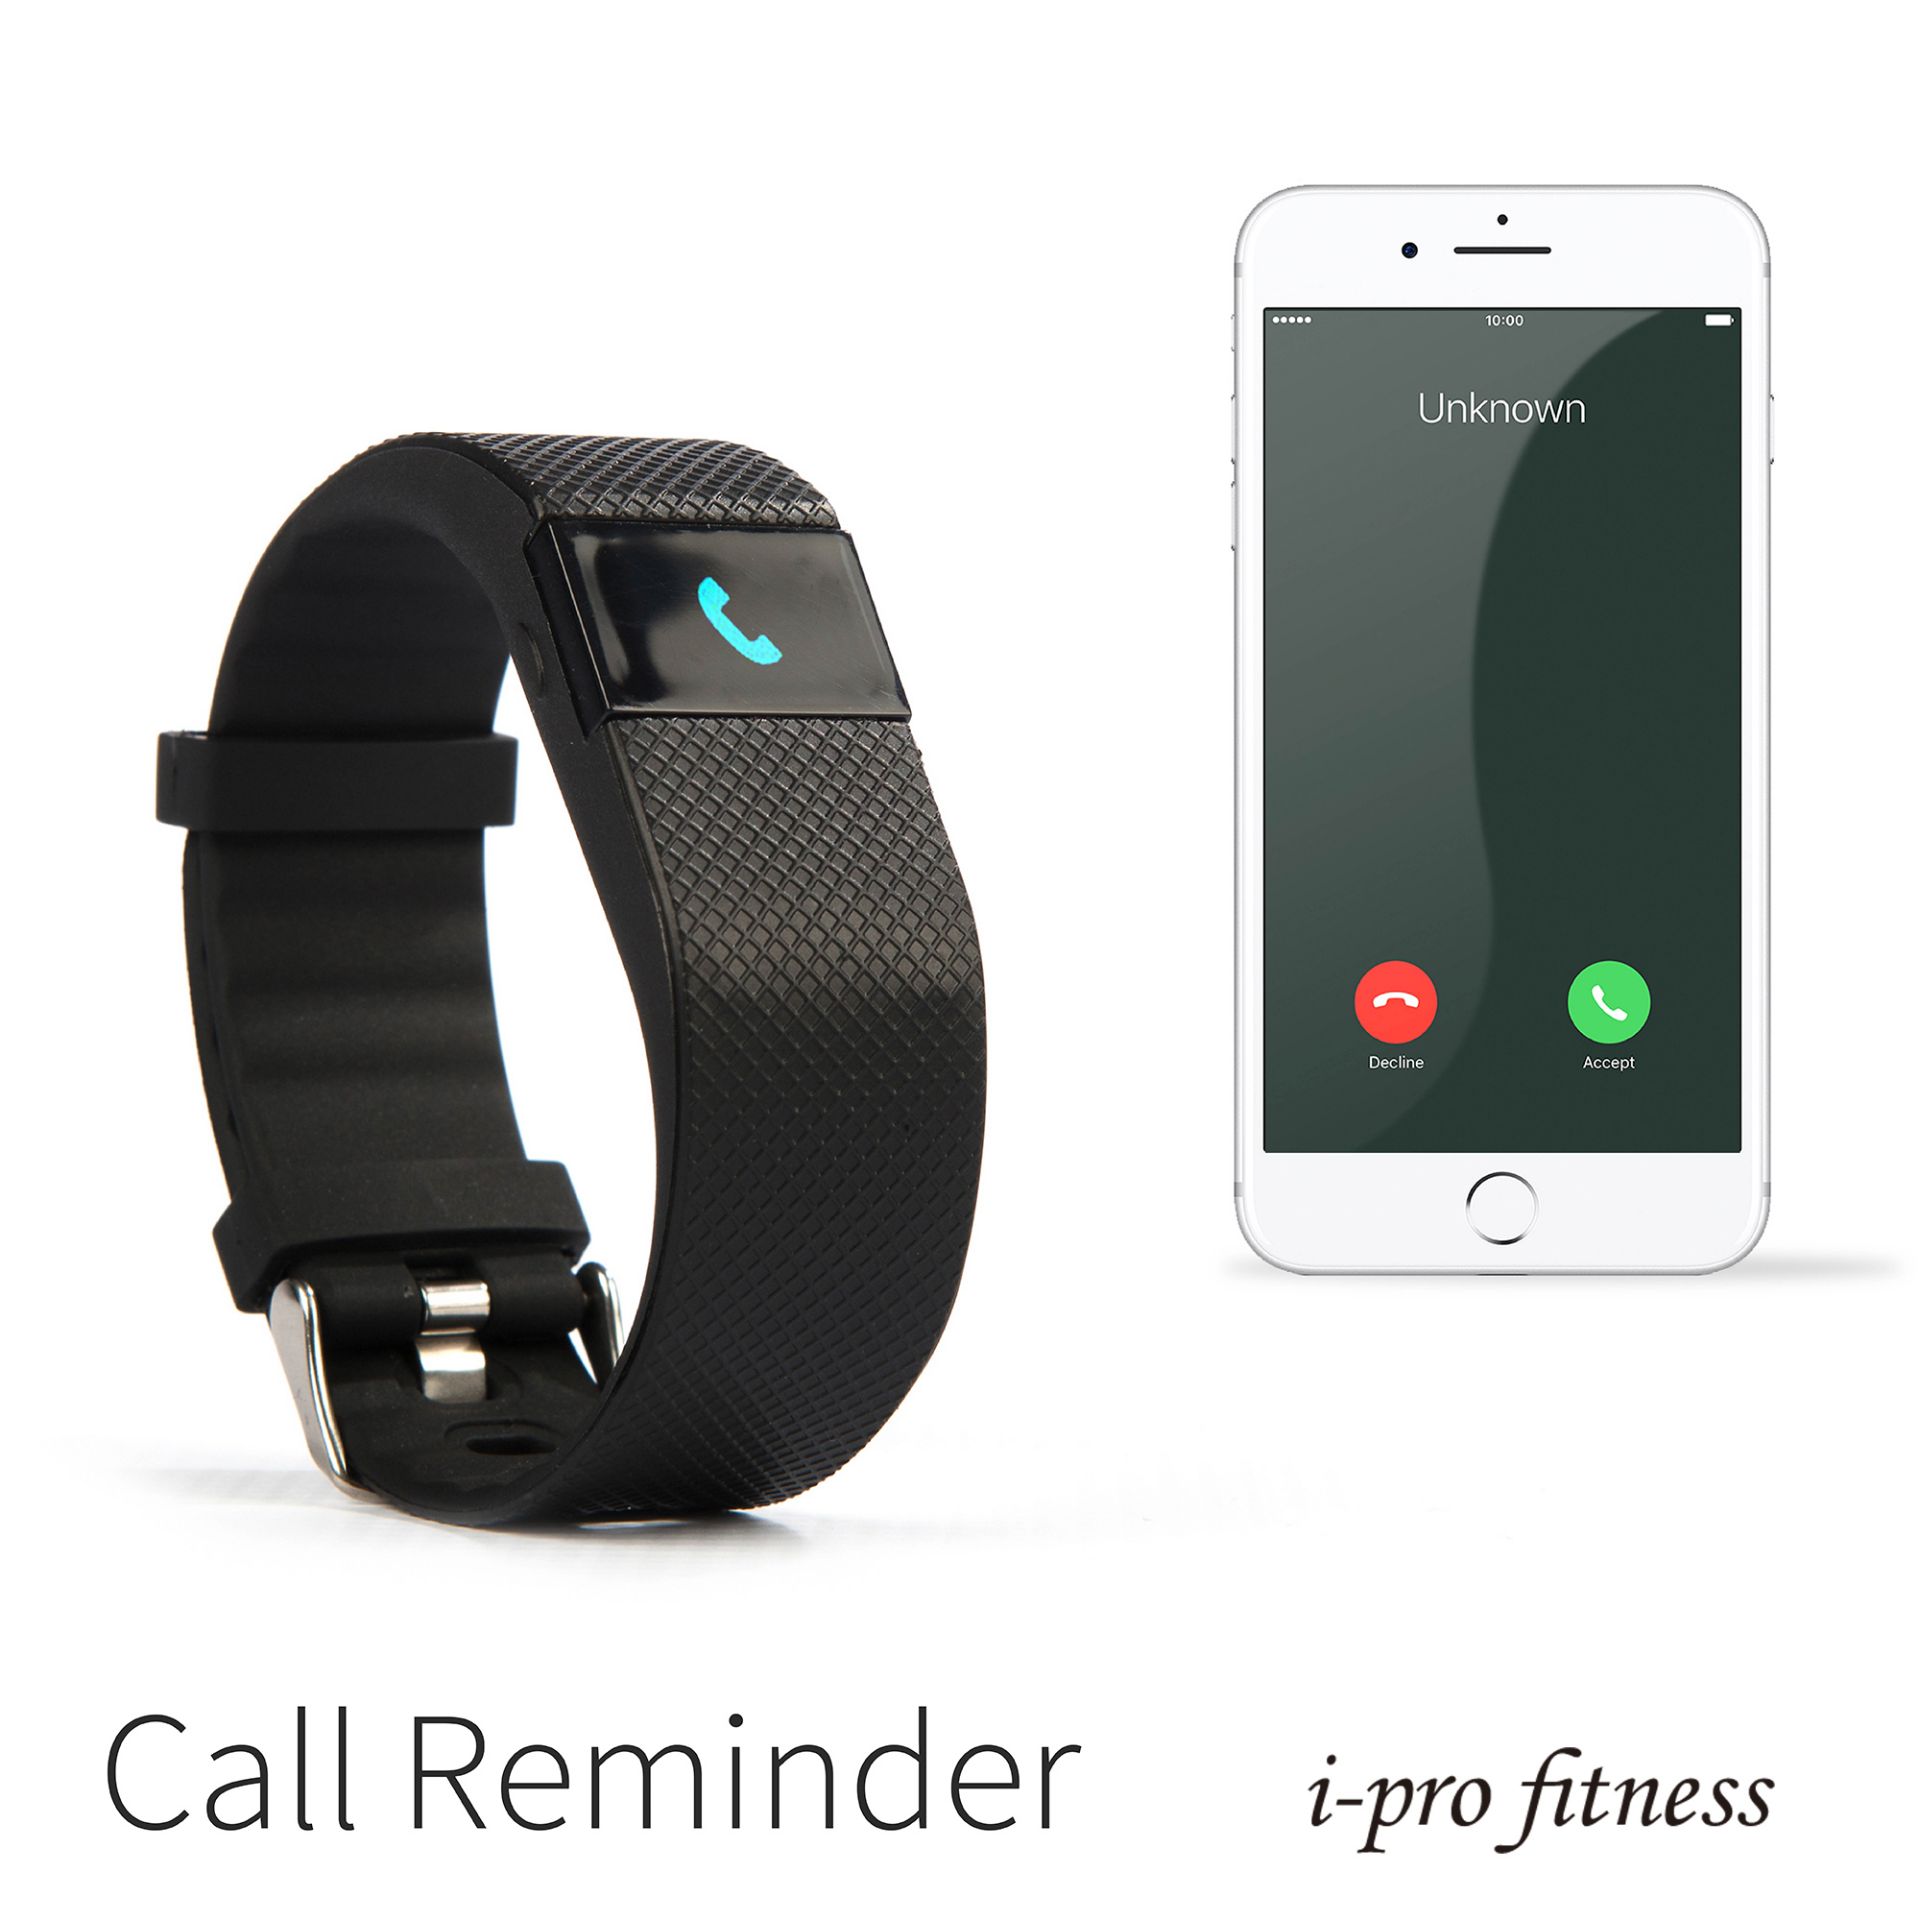 10x Fitness Tracker i-pro fitness, Bluetooth 4.0 Sports Smart Bracelet, Heart Rate Monitor, - Image 2 of 8